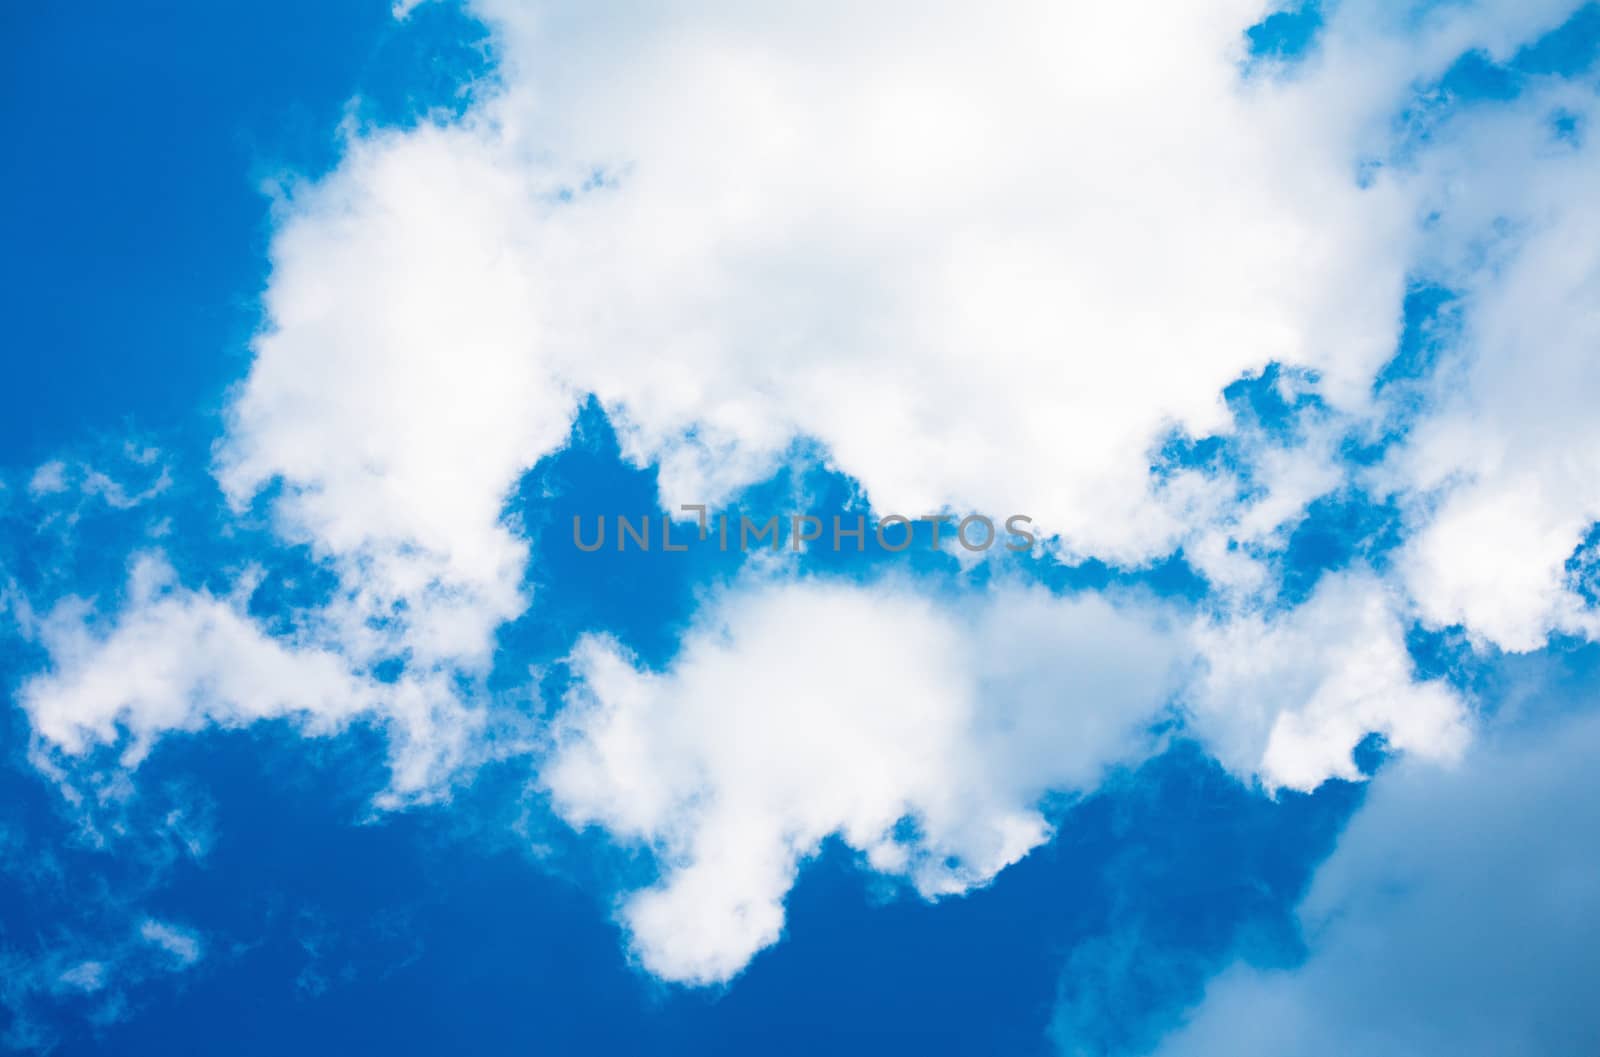 Blue sky with white cloud closeup